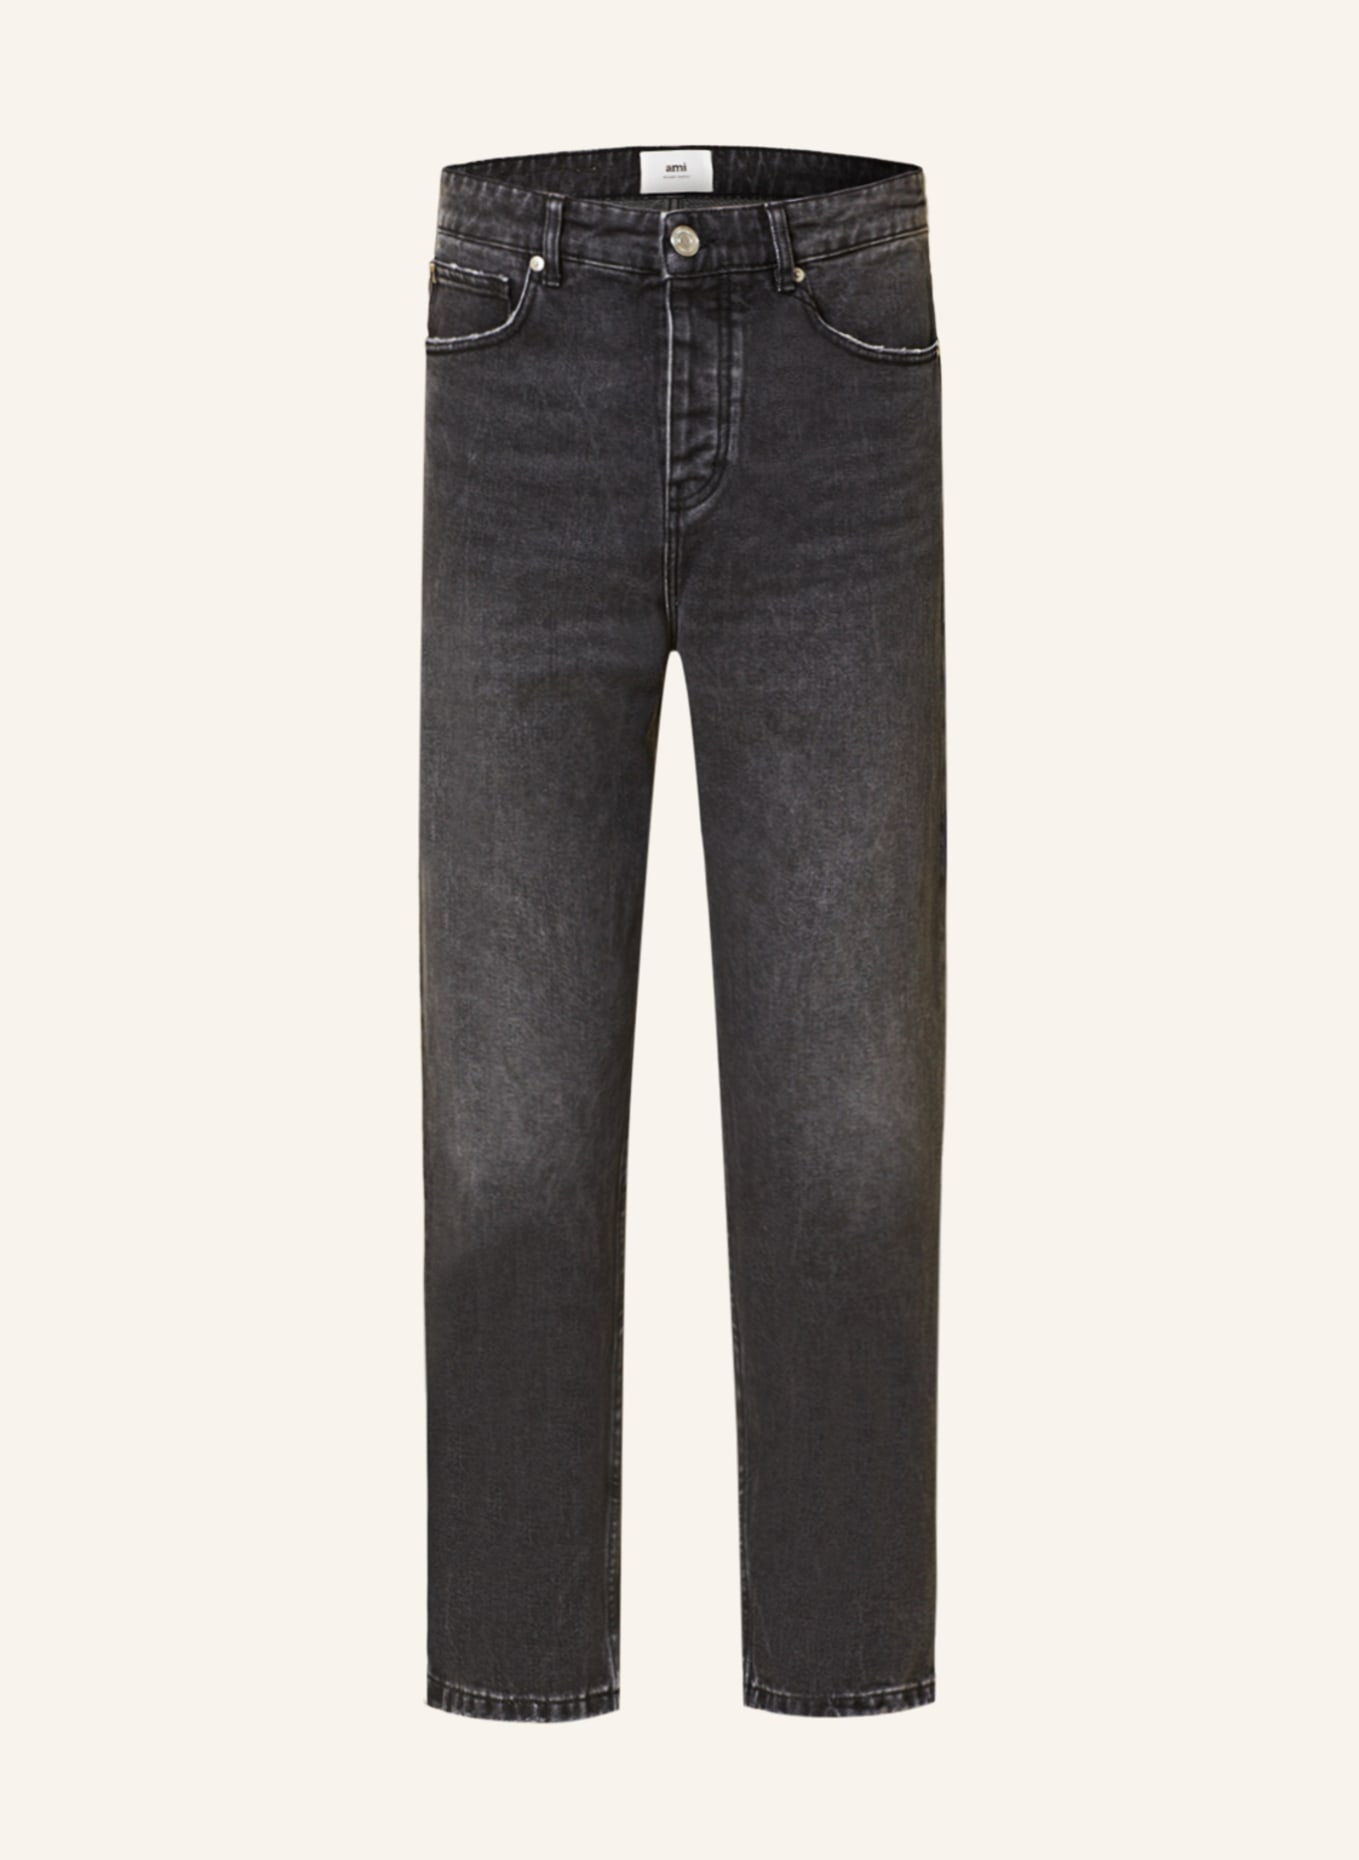 AMI PARIS Jeans Tapered Fit, Farbe: 031 USED BLACK (Bild 1)